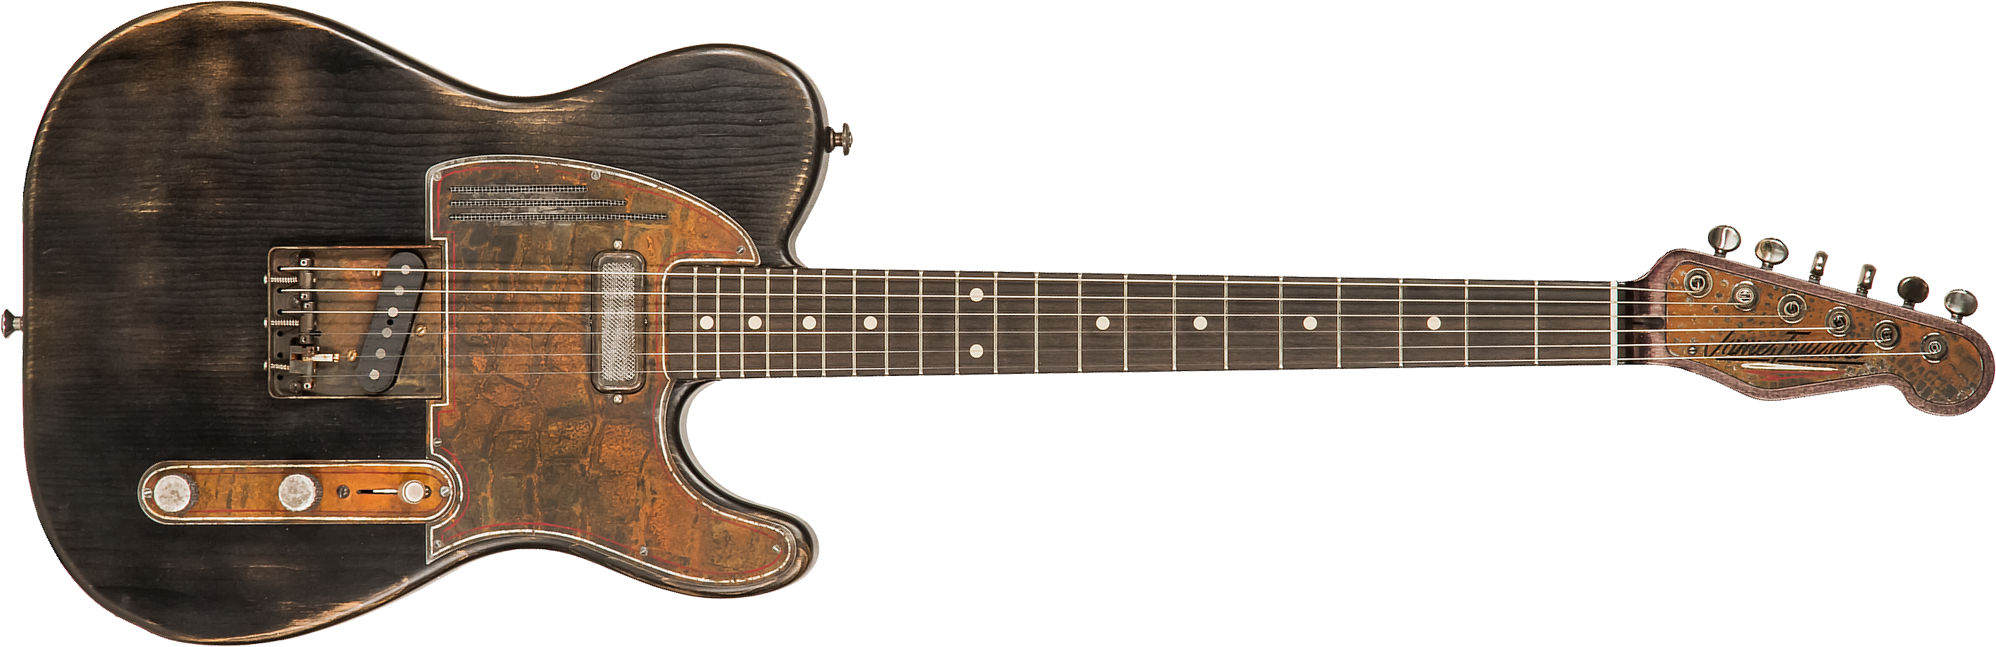 James Trussart Steelguardcaster Glaser B Bender Sh Ht Eb #21062 - Rust O Matic Pinstriped Black Nitro - Tel shape electric guitar - Main picture